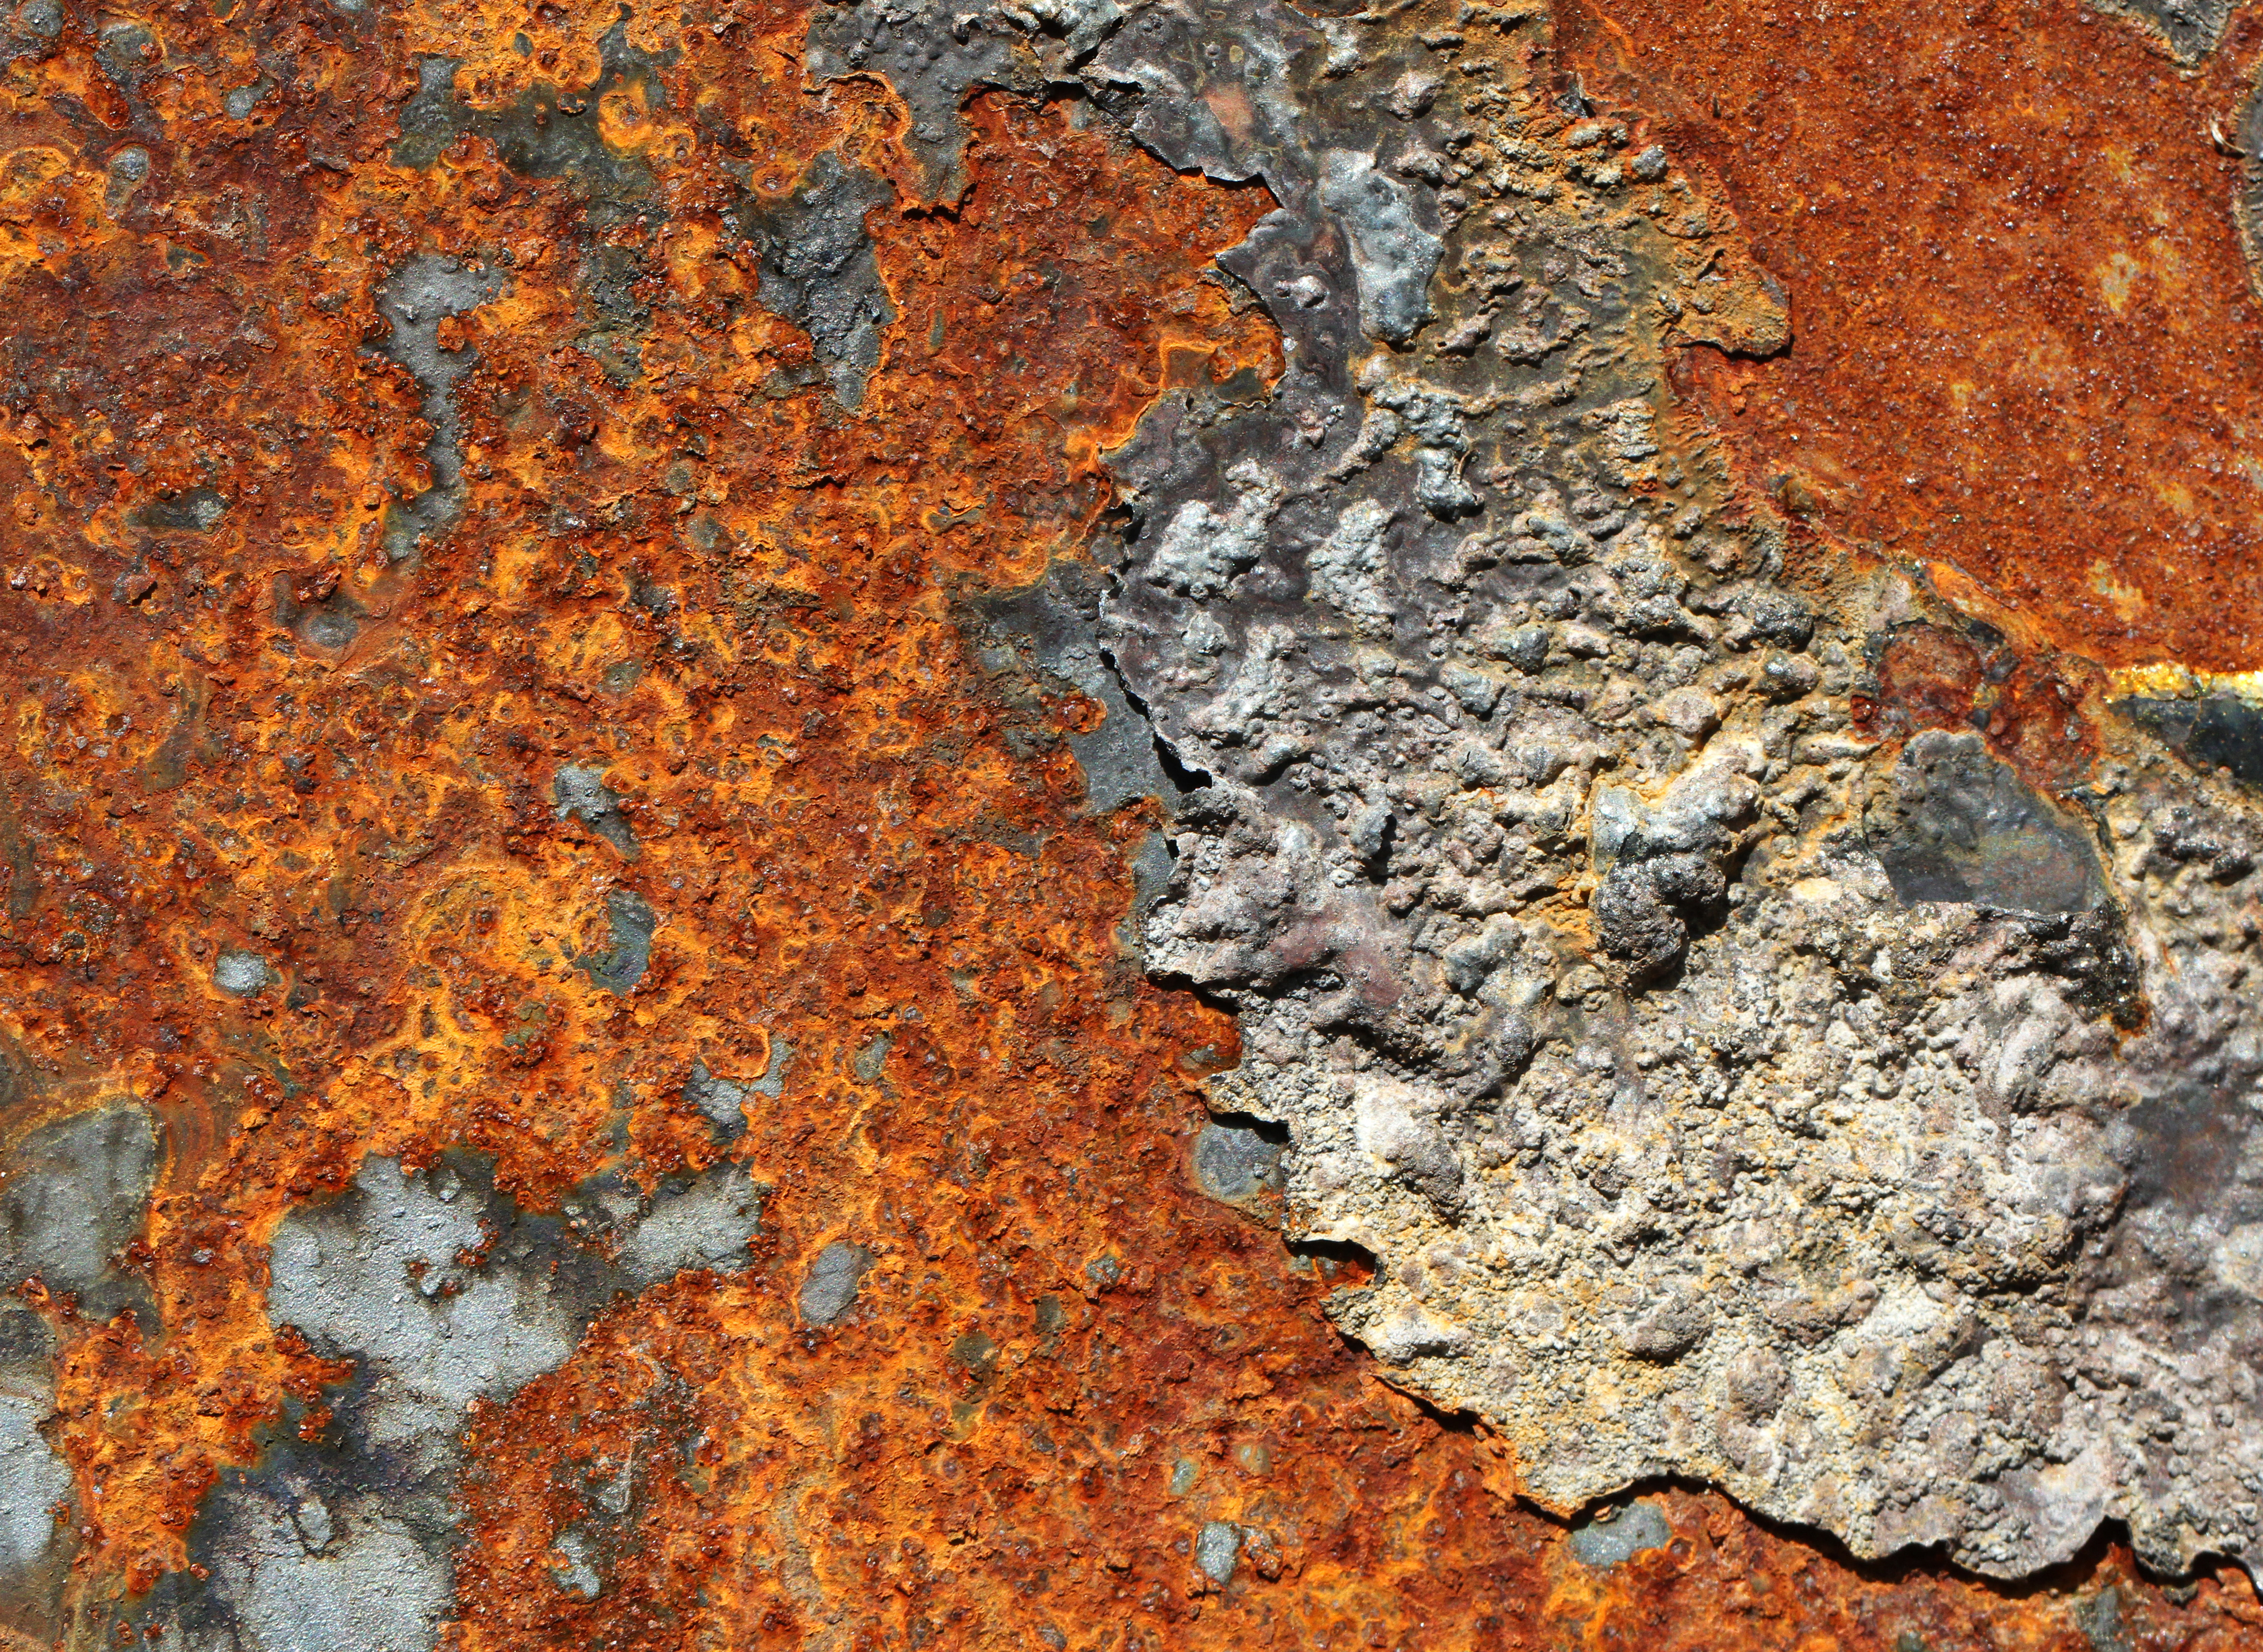 All metals that rust фото 30